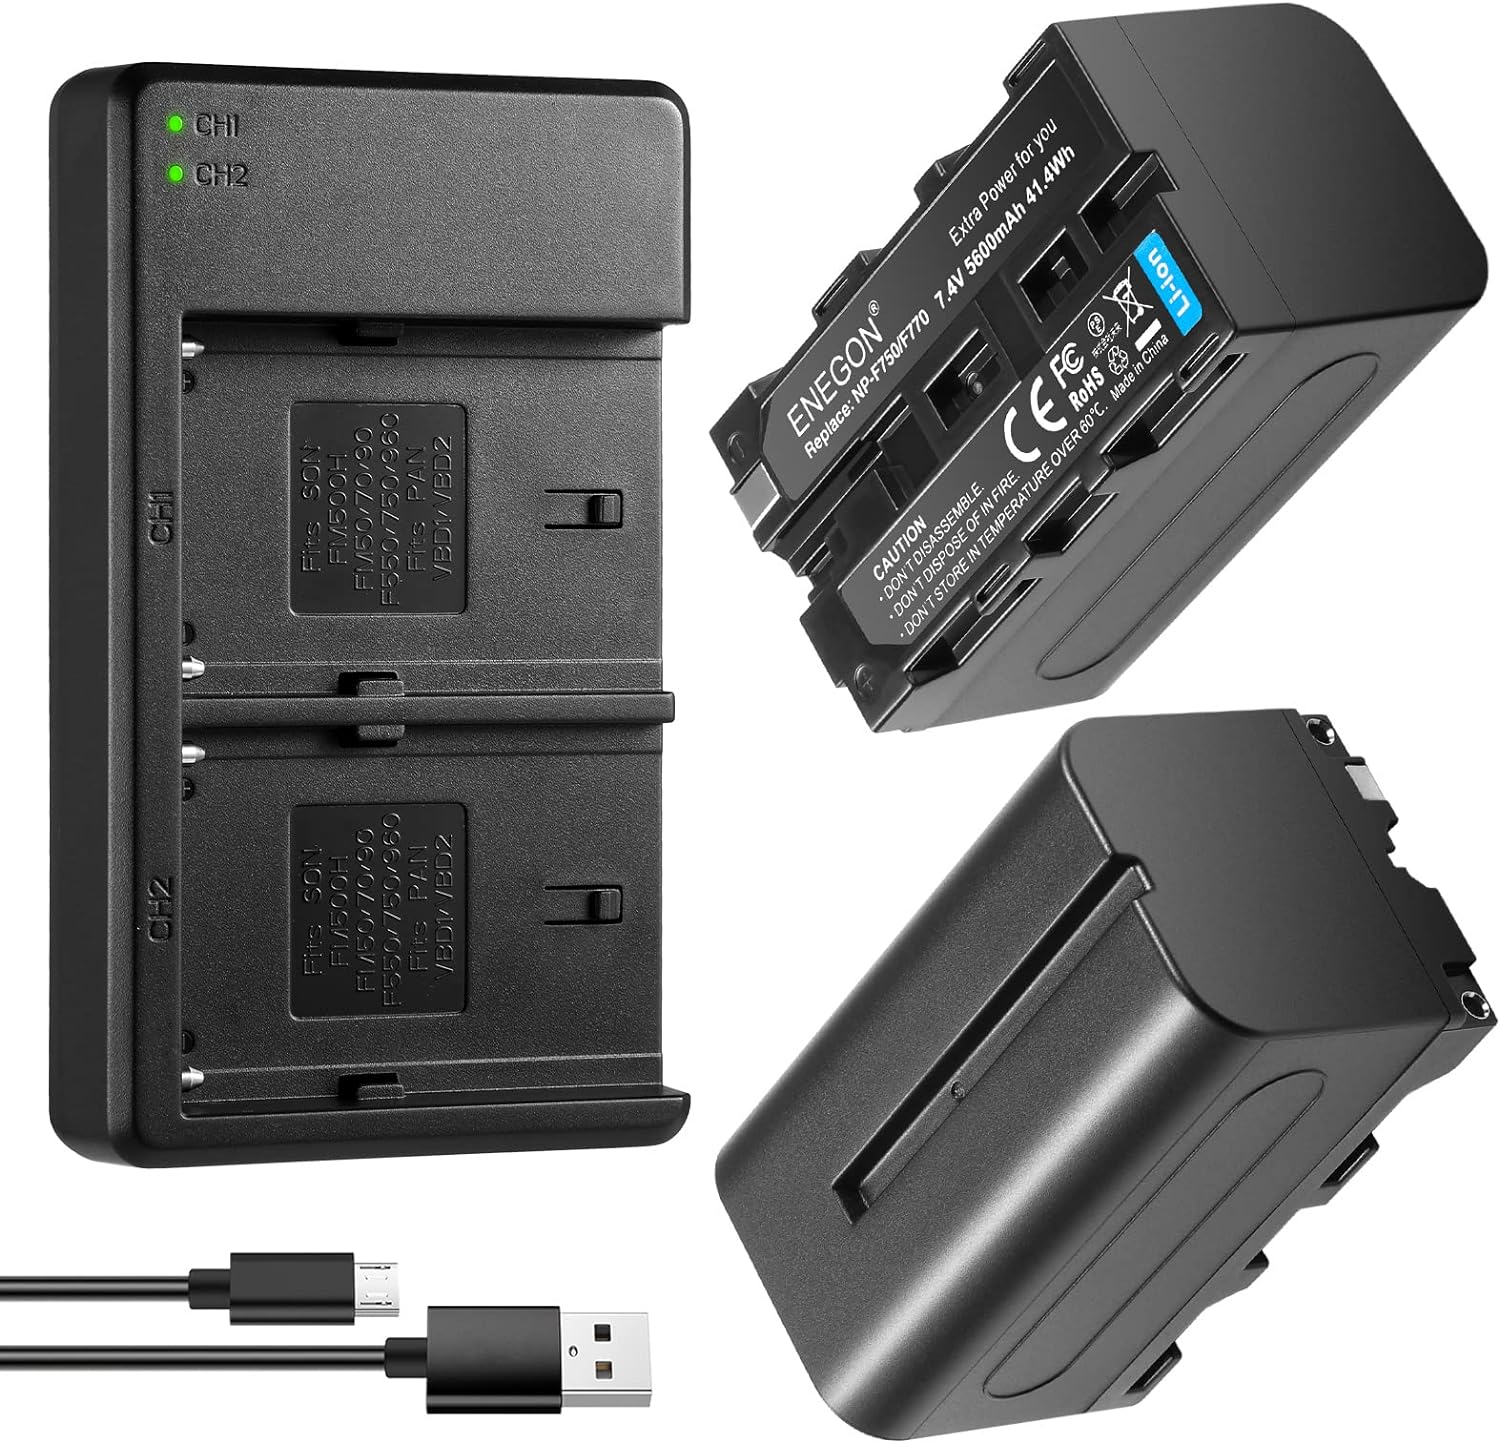 ENEGON NP-F750 Batería de Repuesto (Paquete de 2, 5600mAh) y Smart LED Cargador USB para Sony NP-F550 570 750 770 930 950 FM55H FM500H QM71 QM91 QM71D y Led Light, Monitor, Motorized Slider